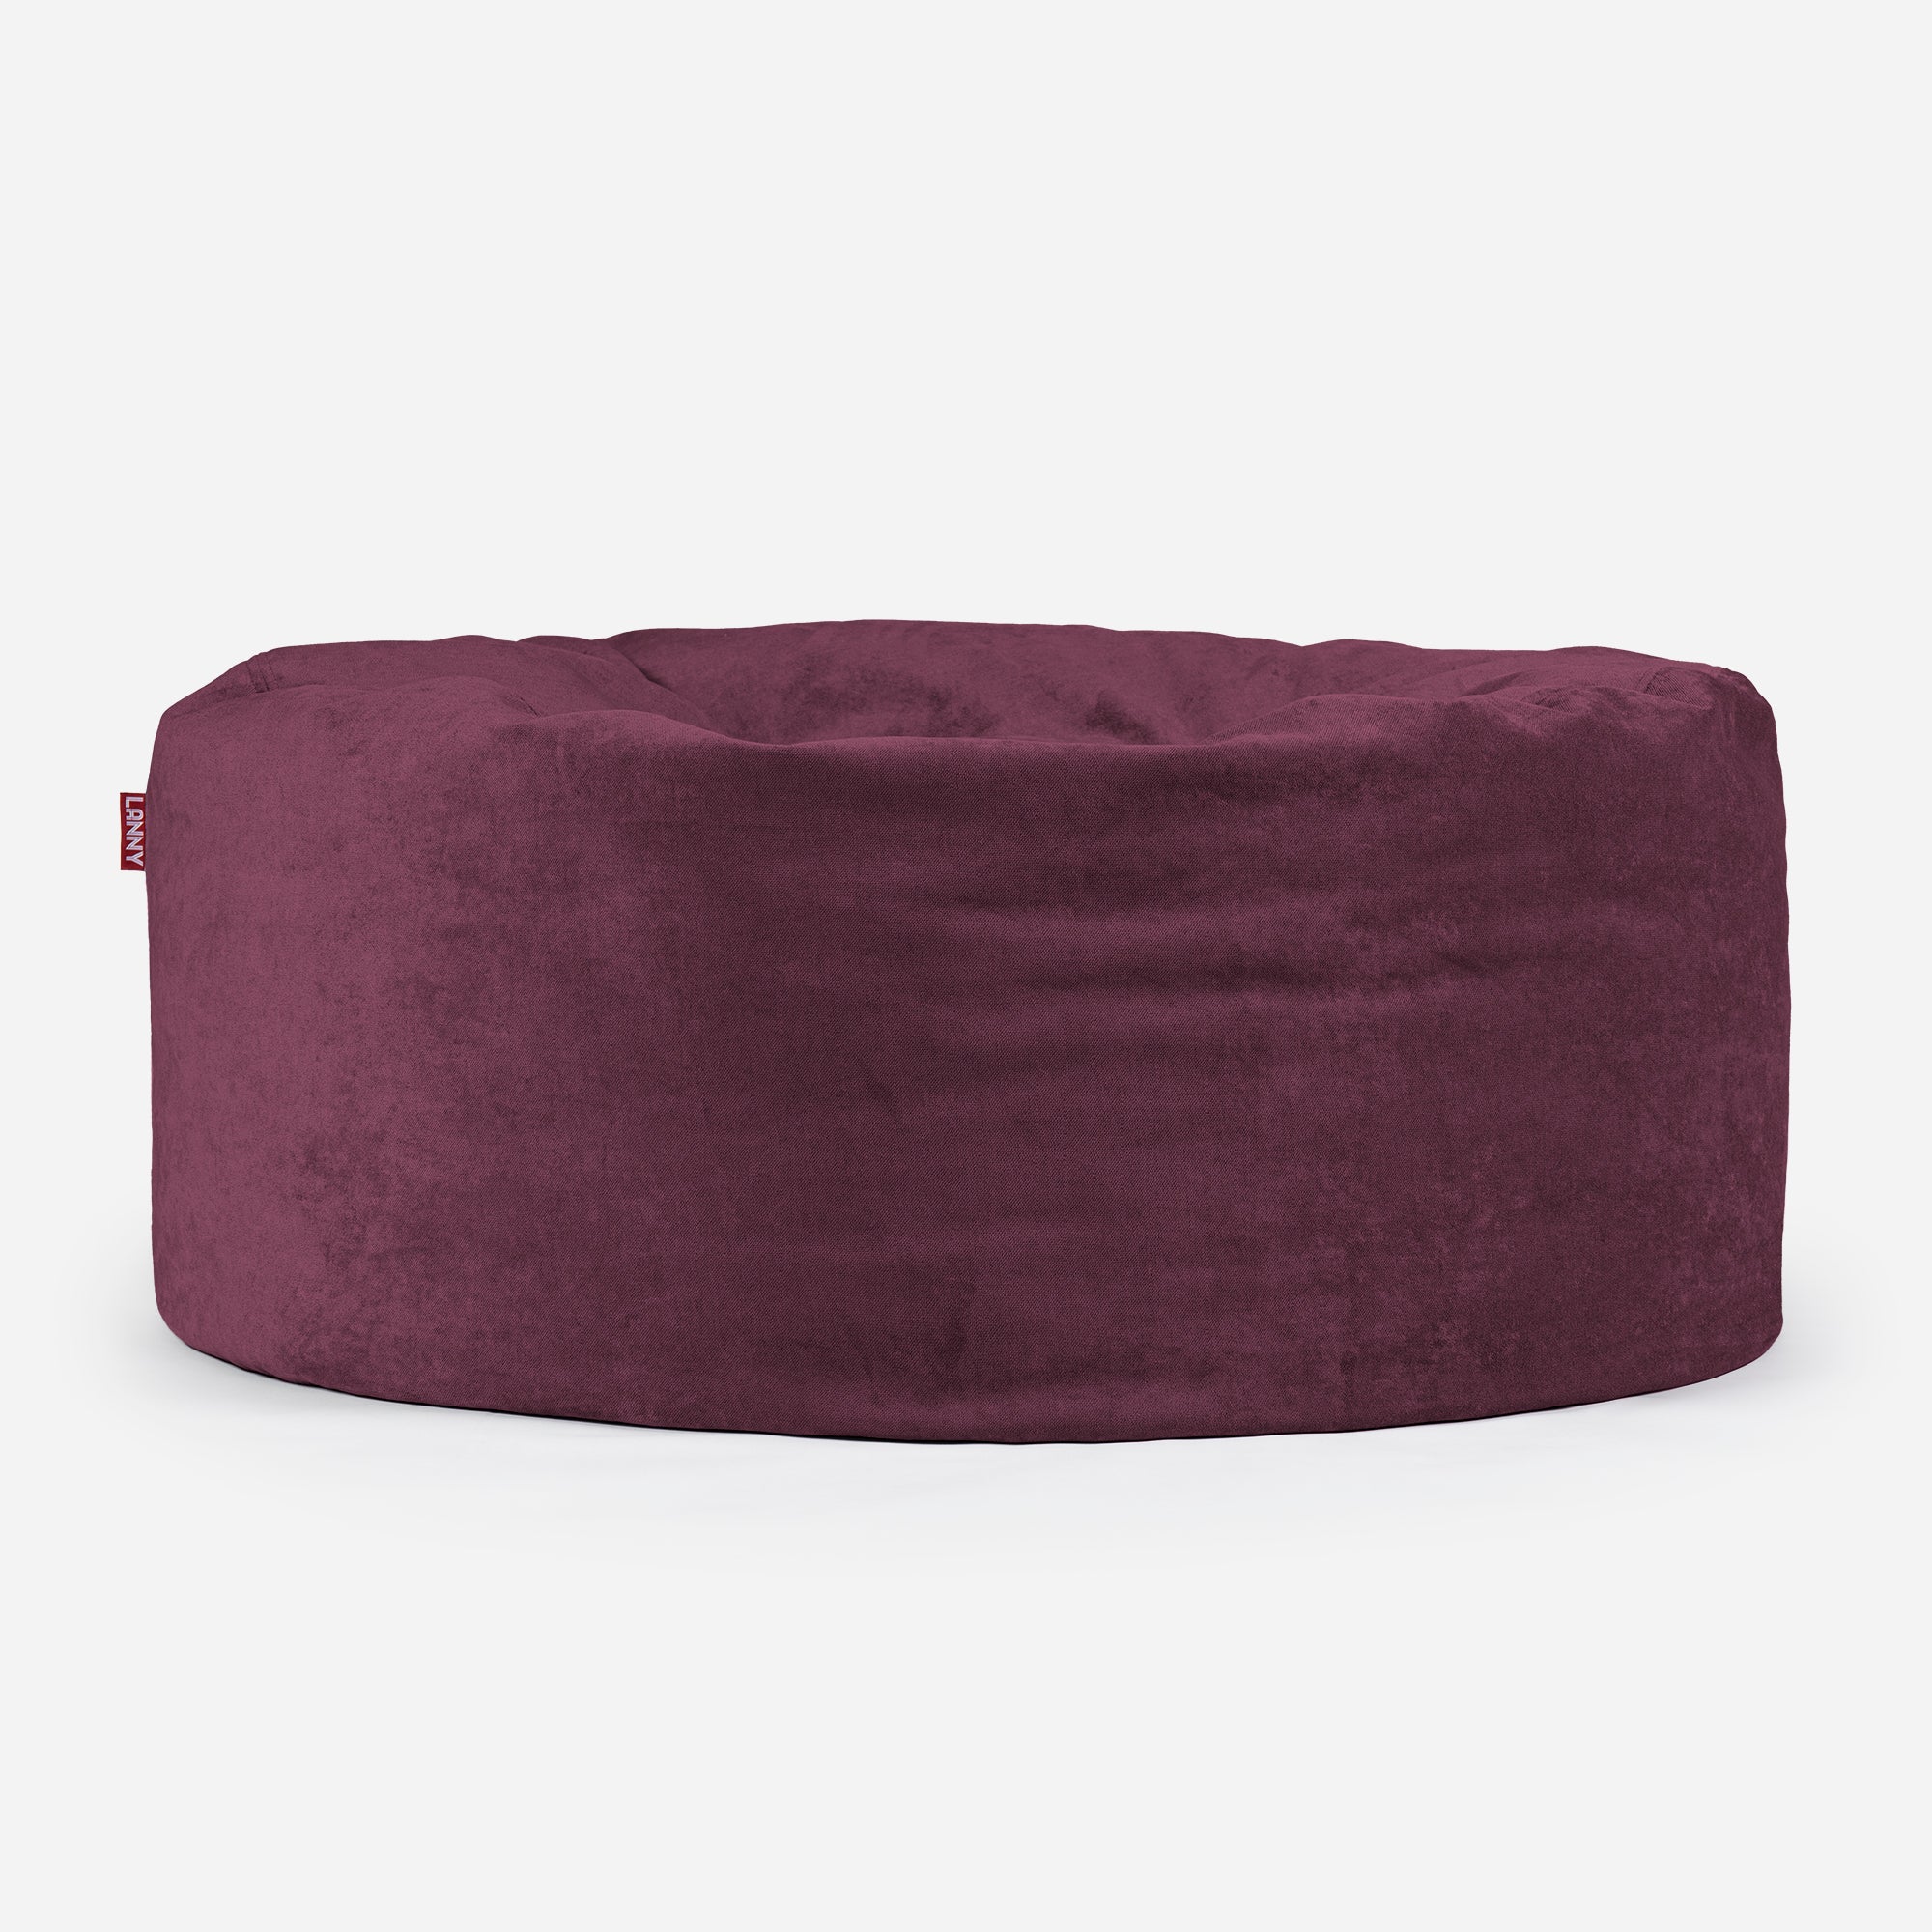 Large Original Aldo Purple Bean Bag